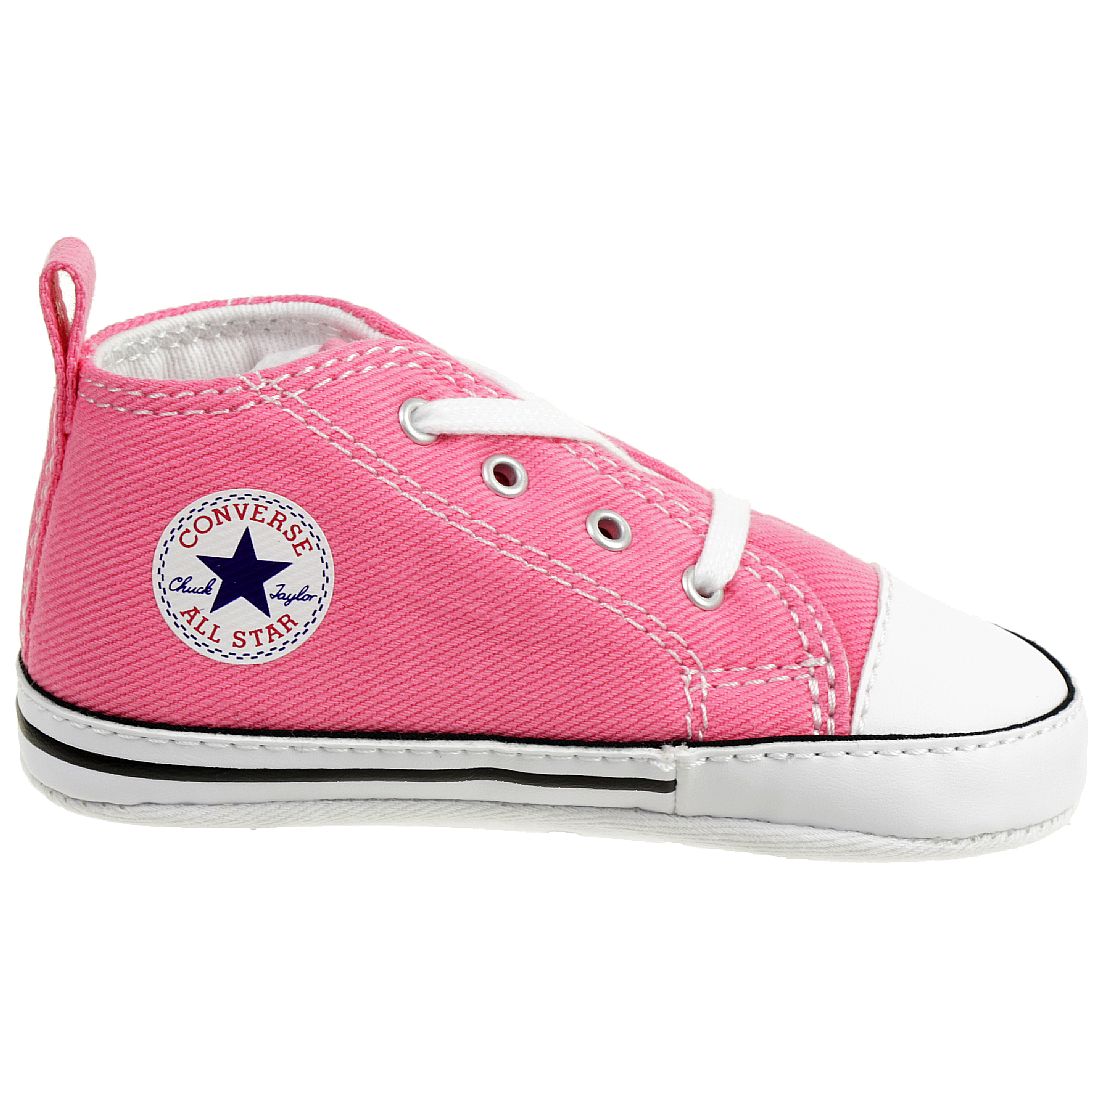 Converse FIRST STAR HI Baby Sneaker Chucks unisex canvas pink 88871